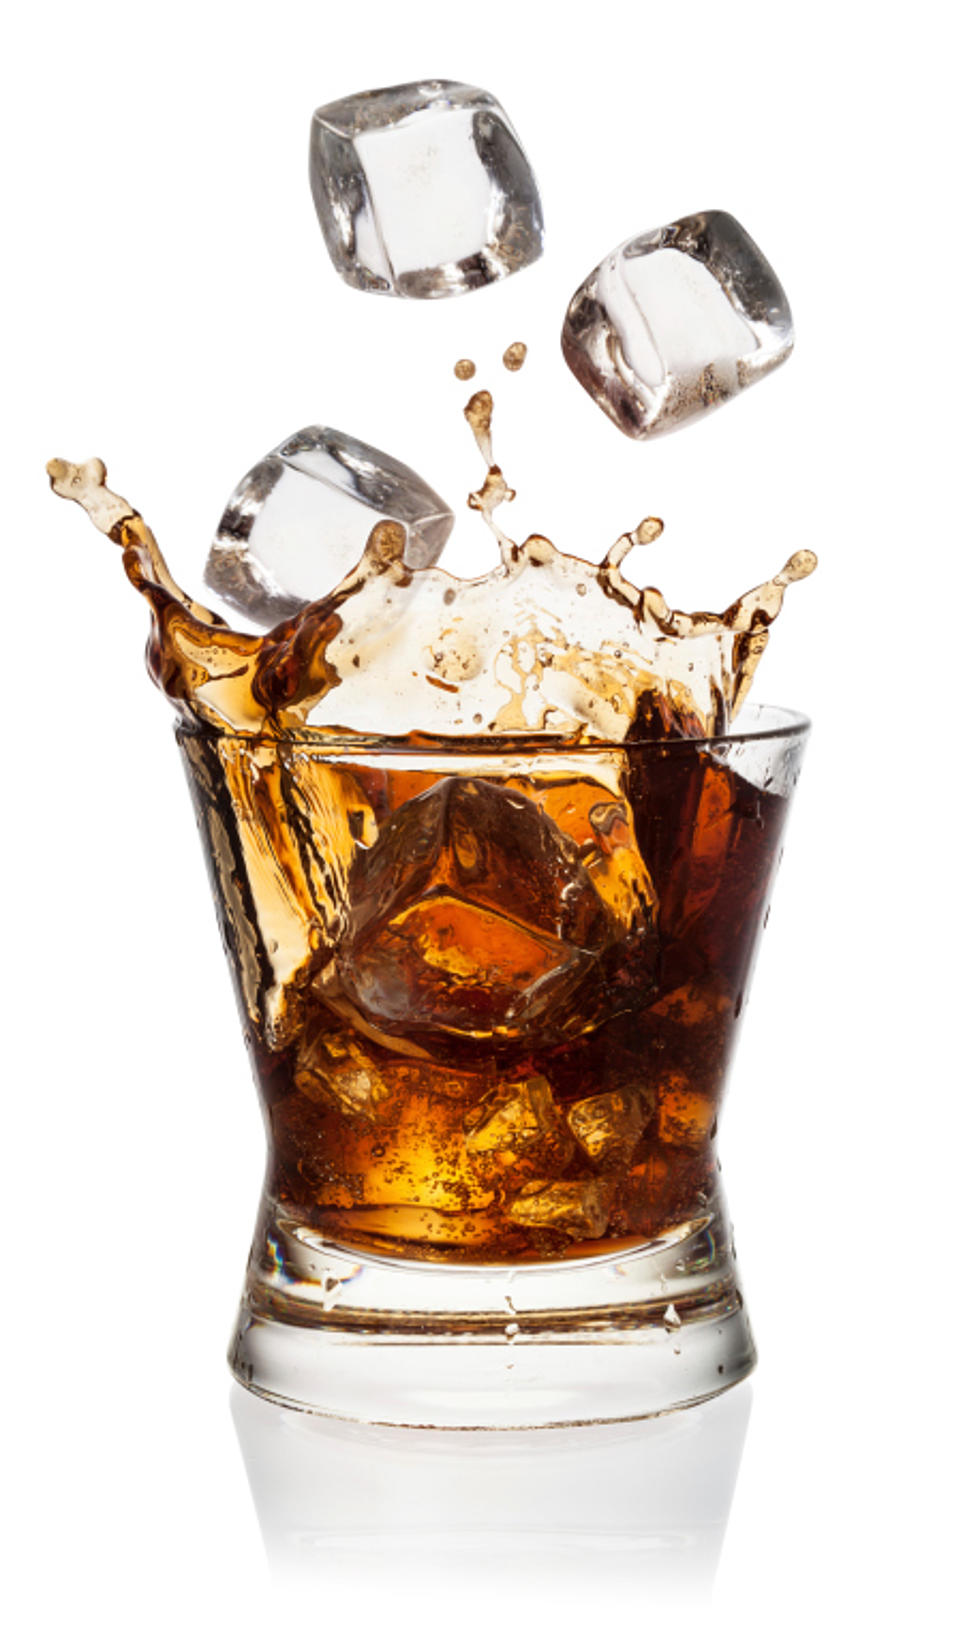 Don’t Mix Diet Soda With Hard Liquor – Raises Breathalyzer Readings